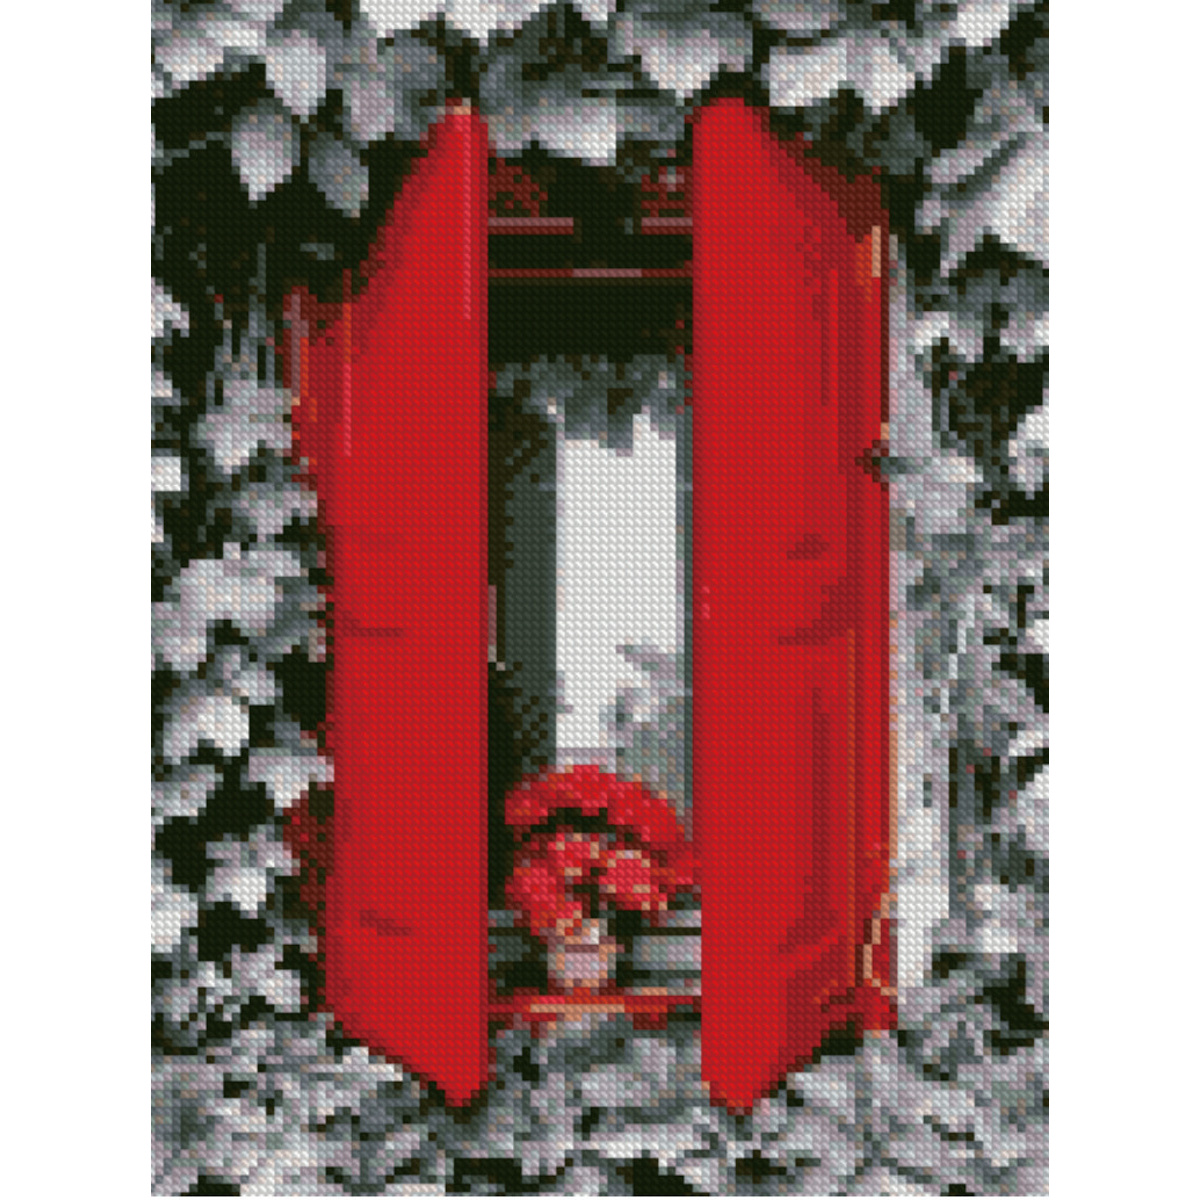 Diamond mosaic Premium HX203 "Red shutters", size 30x40 cm